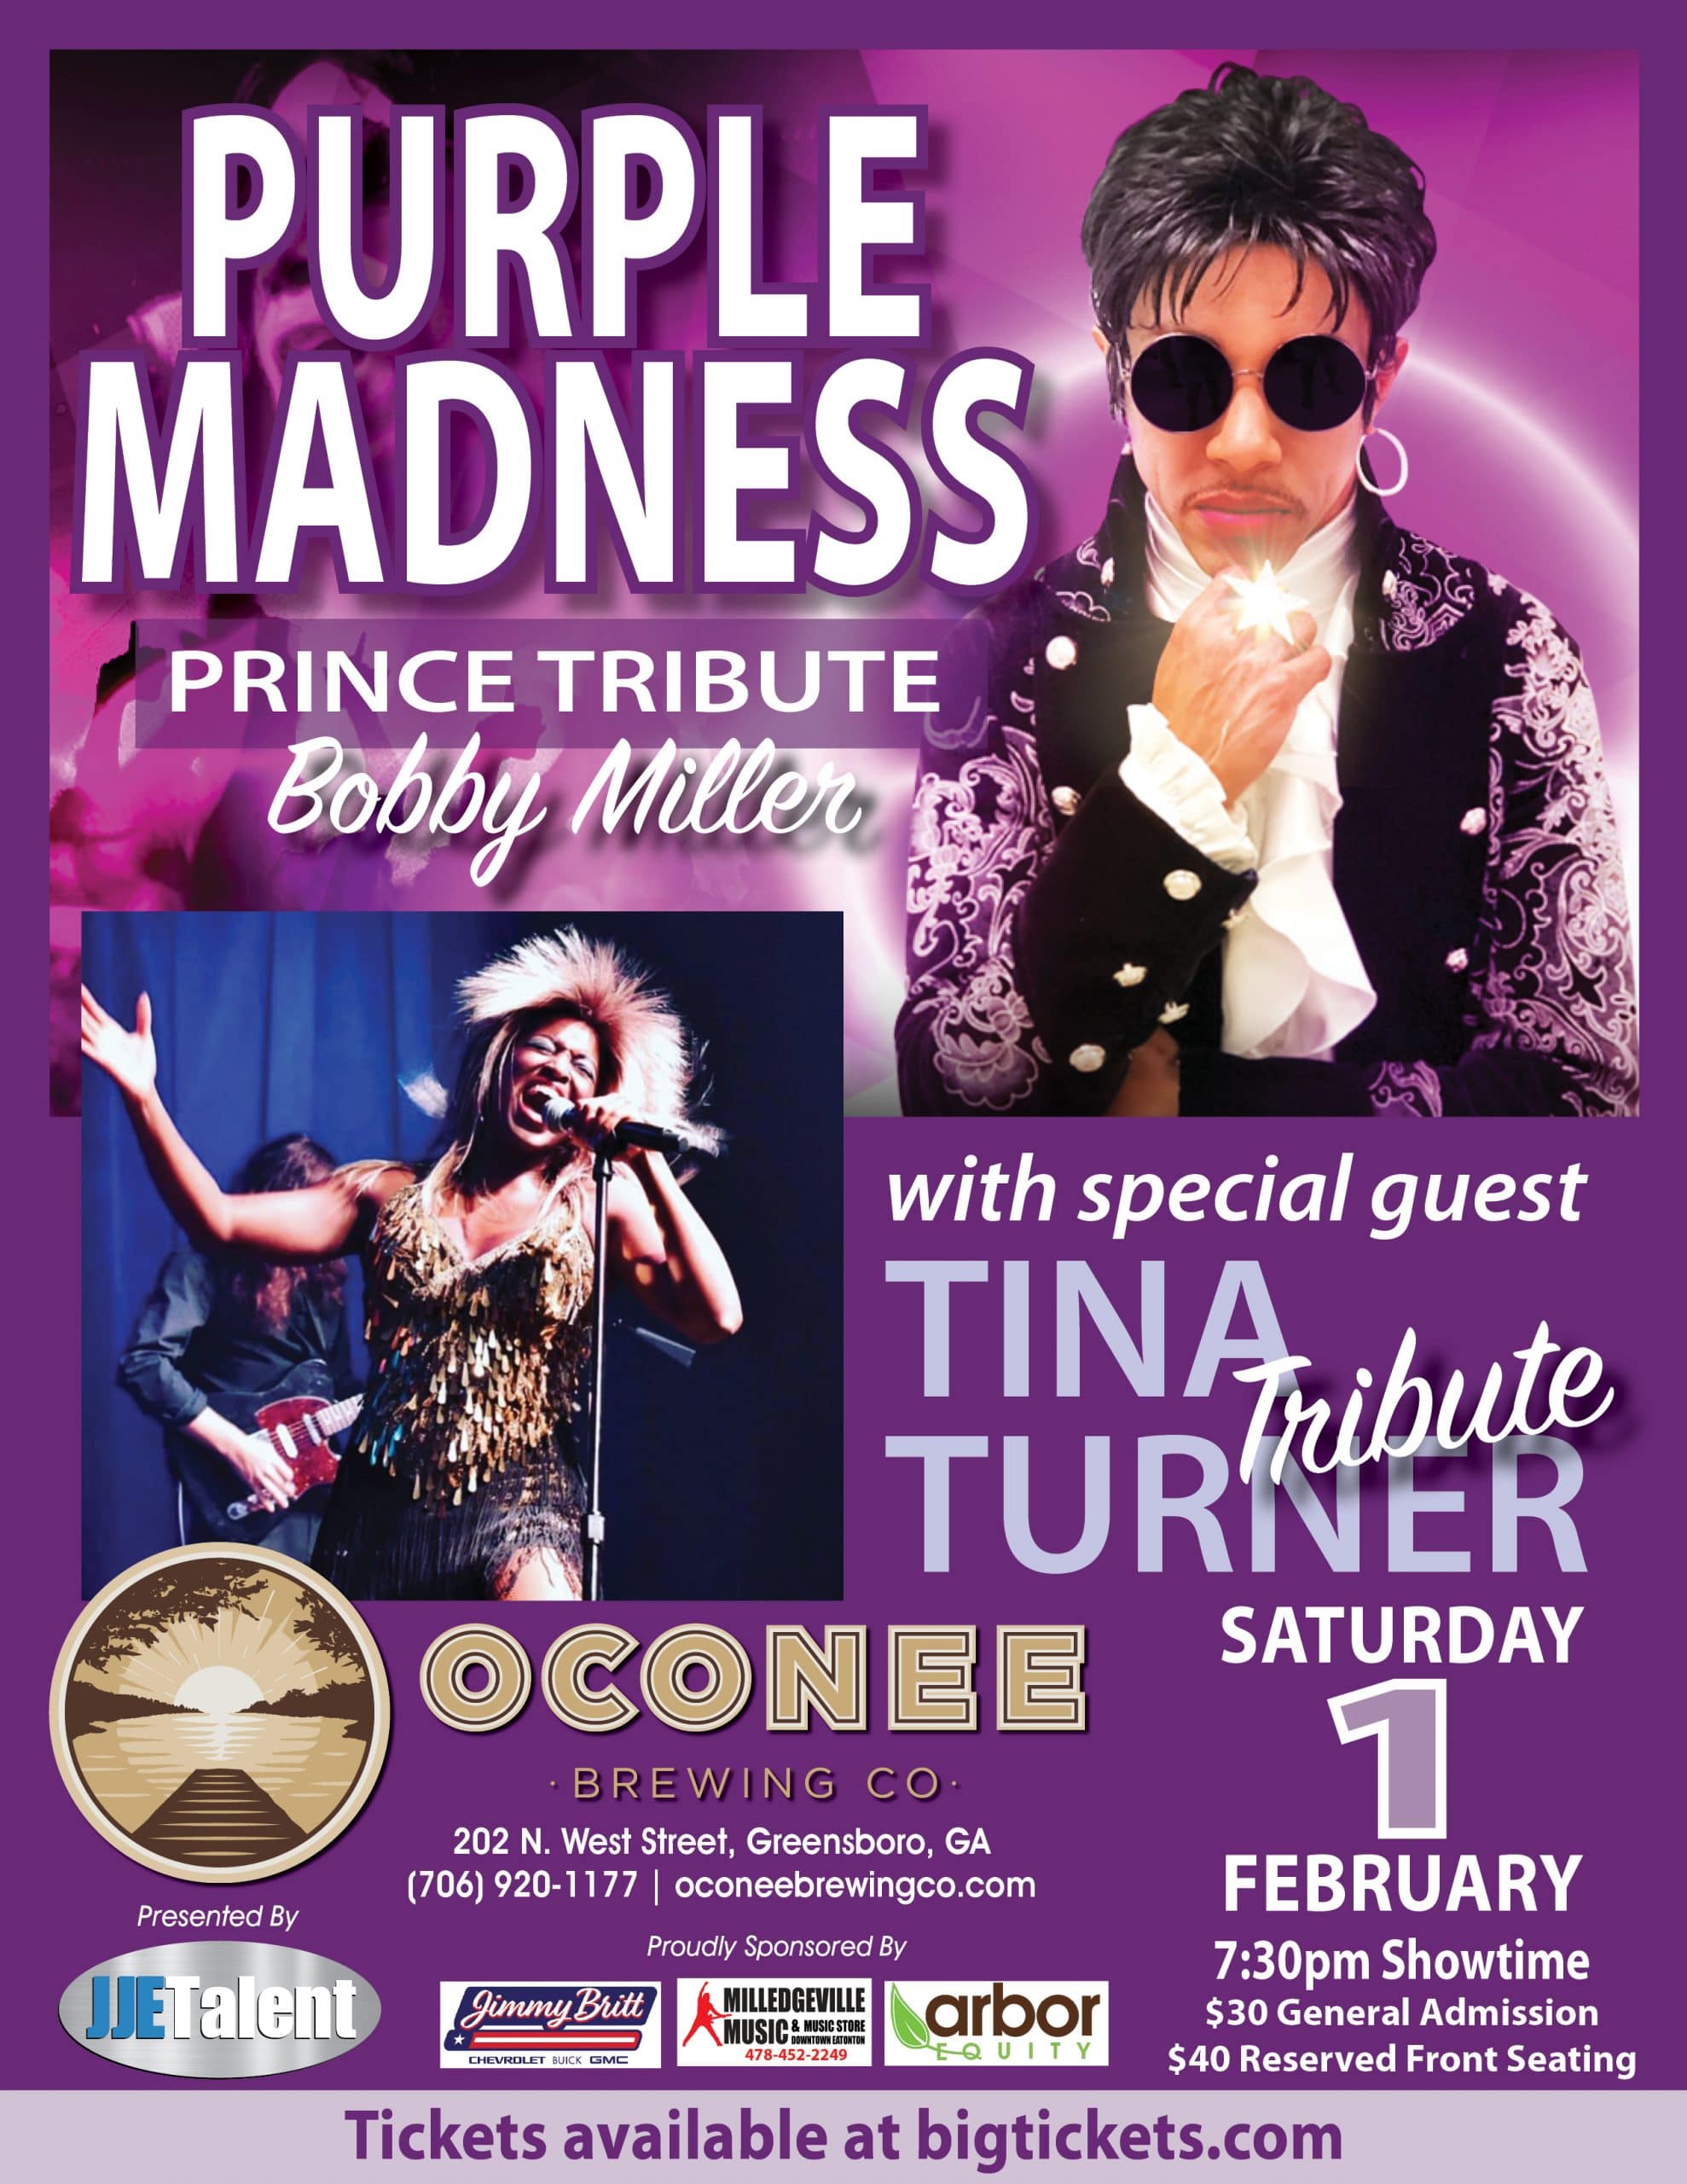 Prince Tribute Lake Oconee